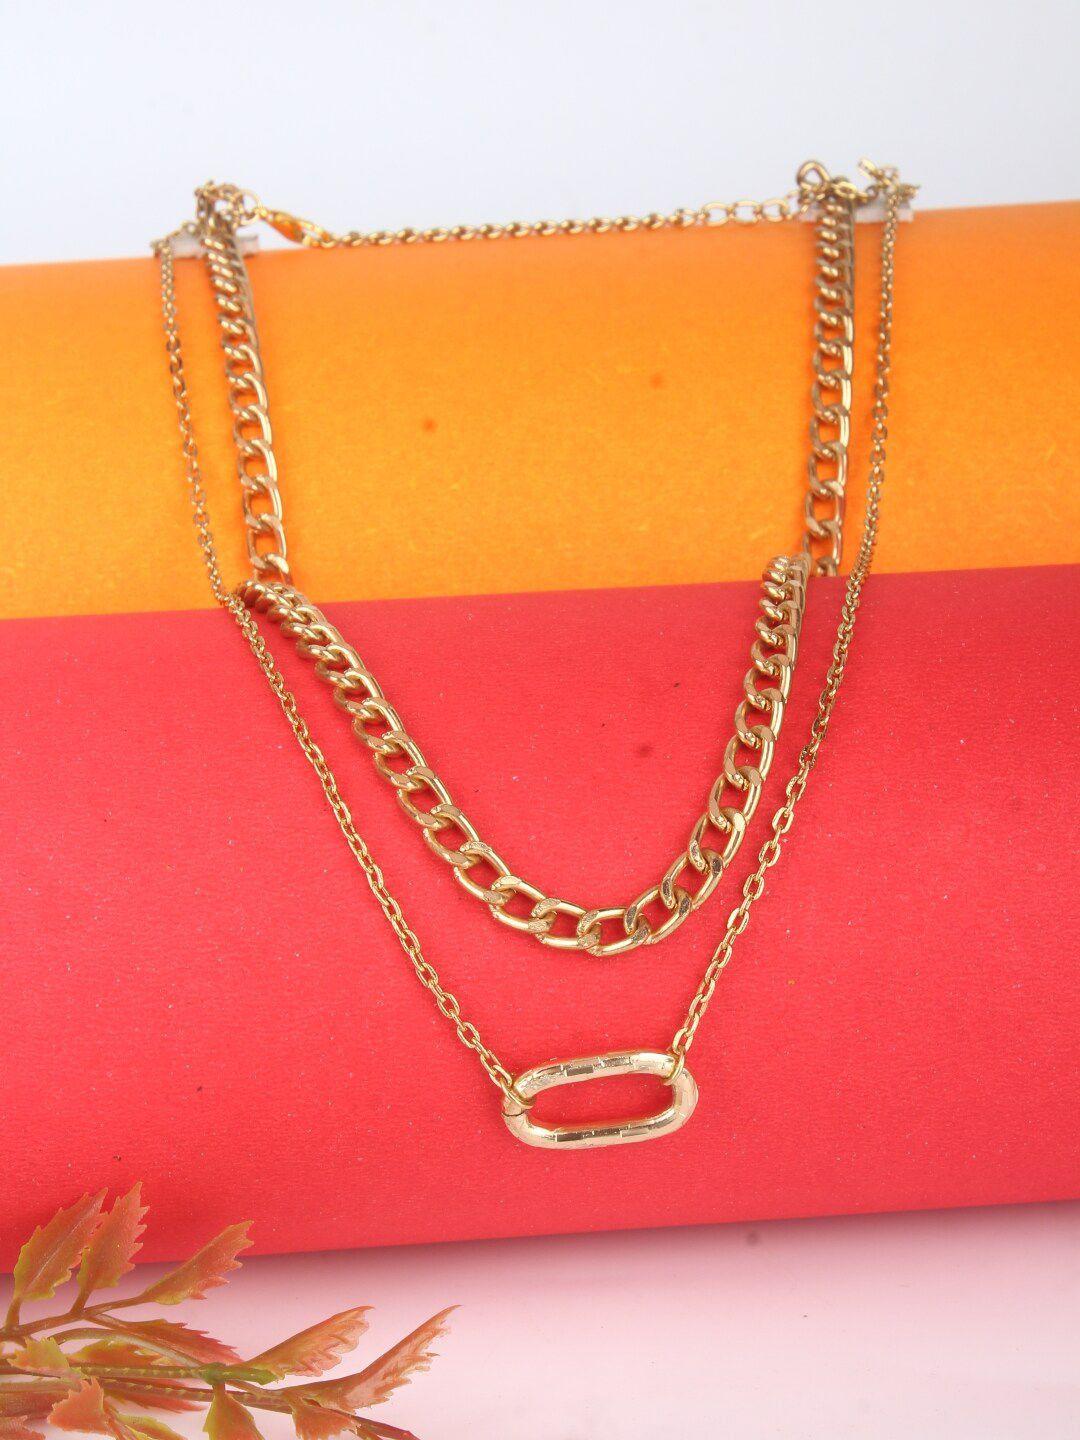 stylecast x kpop gold-plated brass layered necklace